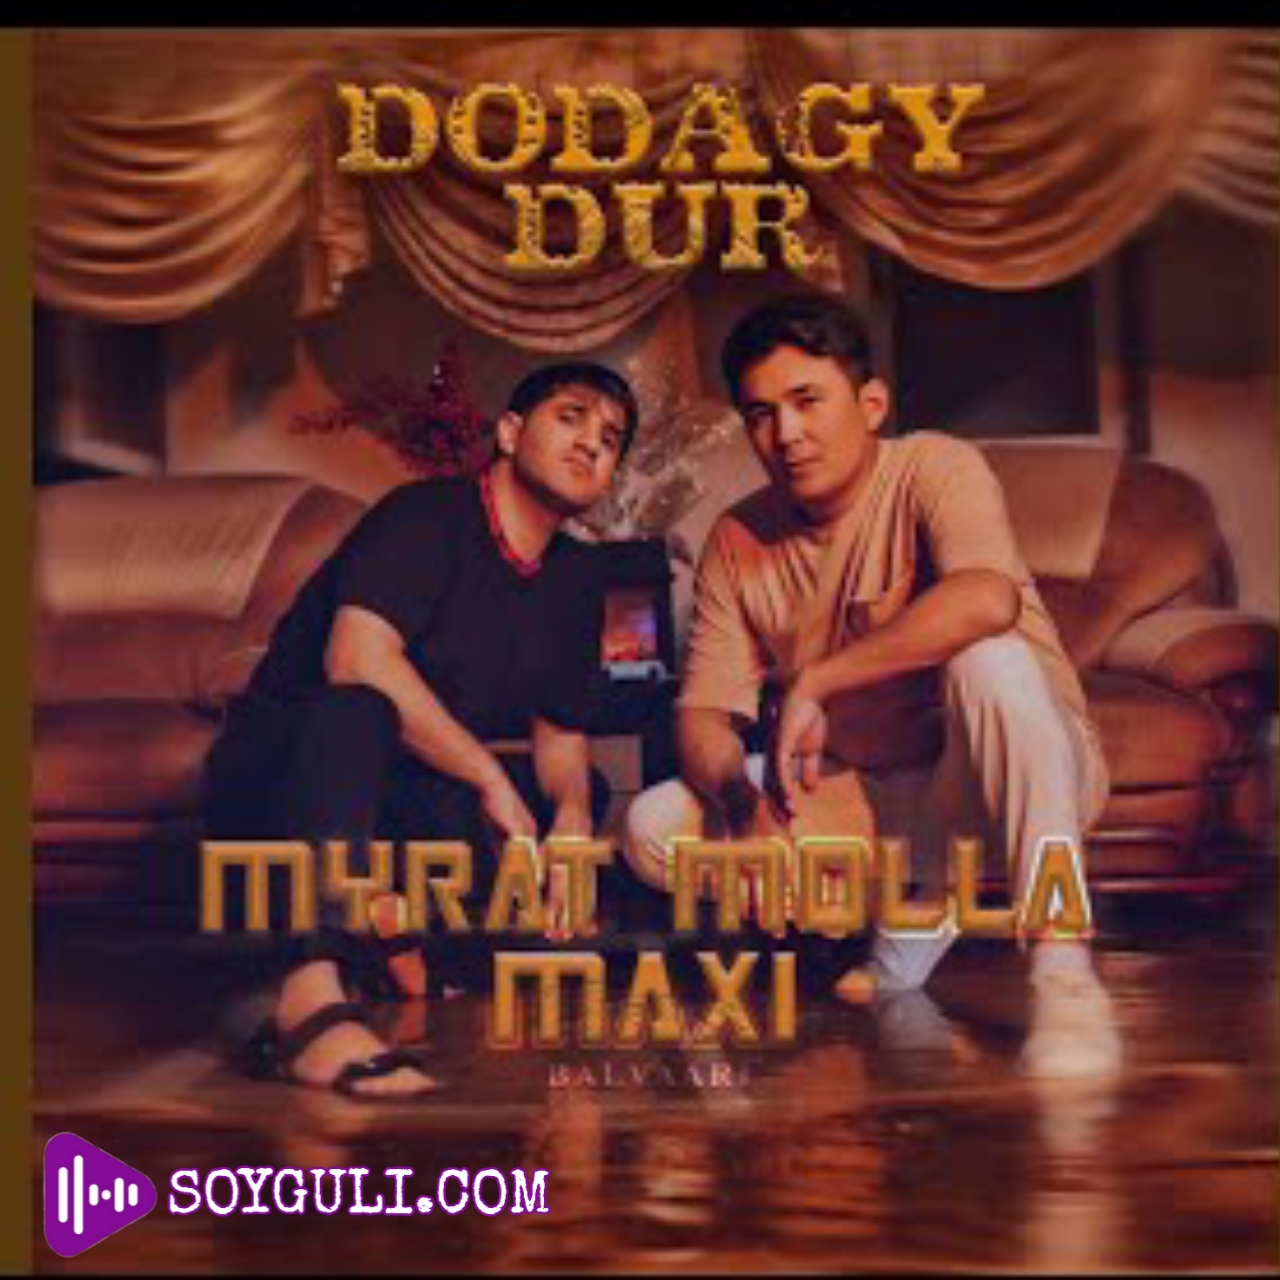 Dodagy dur (.ft Maxi)